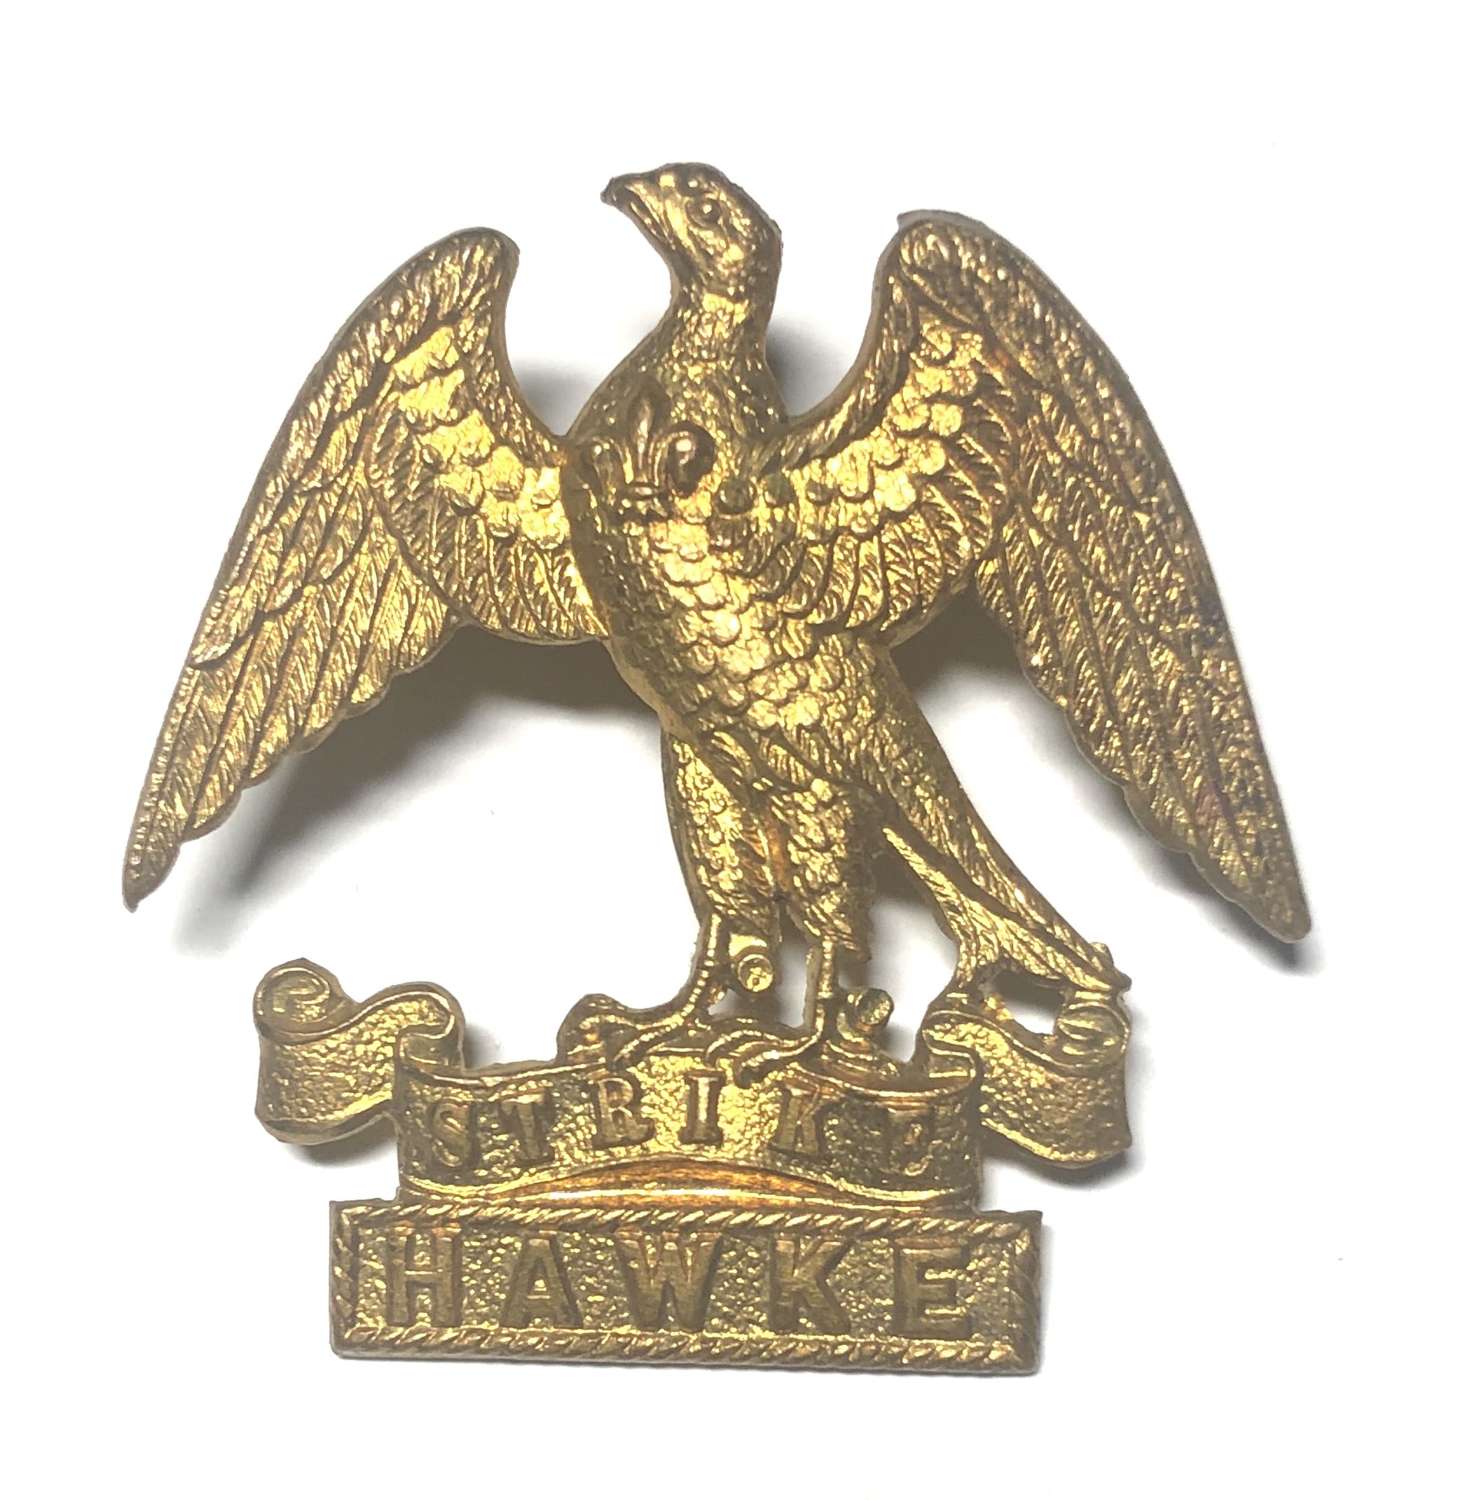 Hawke Battalion Royal Naval Division WW1 RND cap badge circa 1916-18